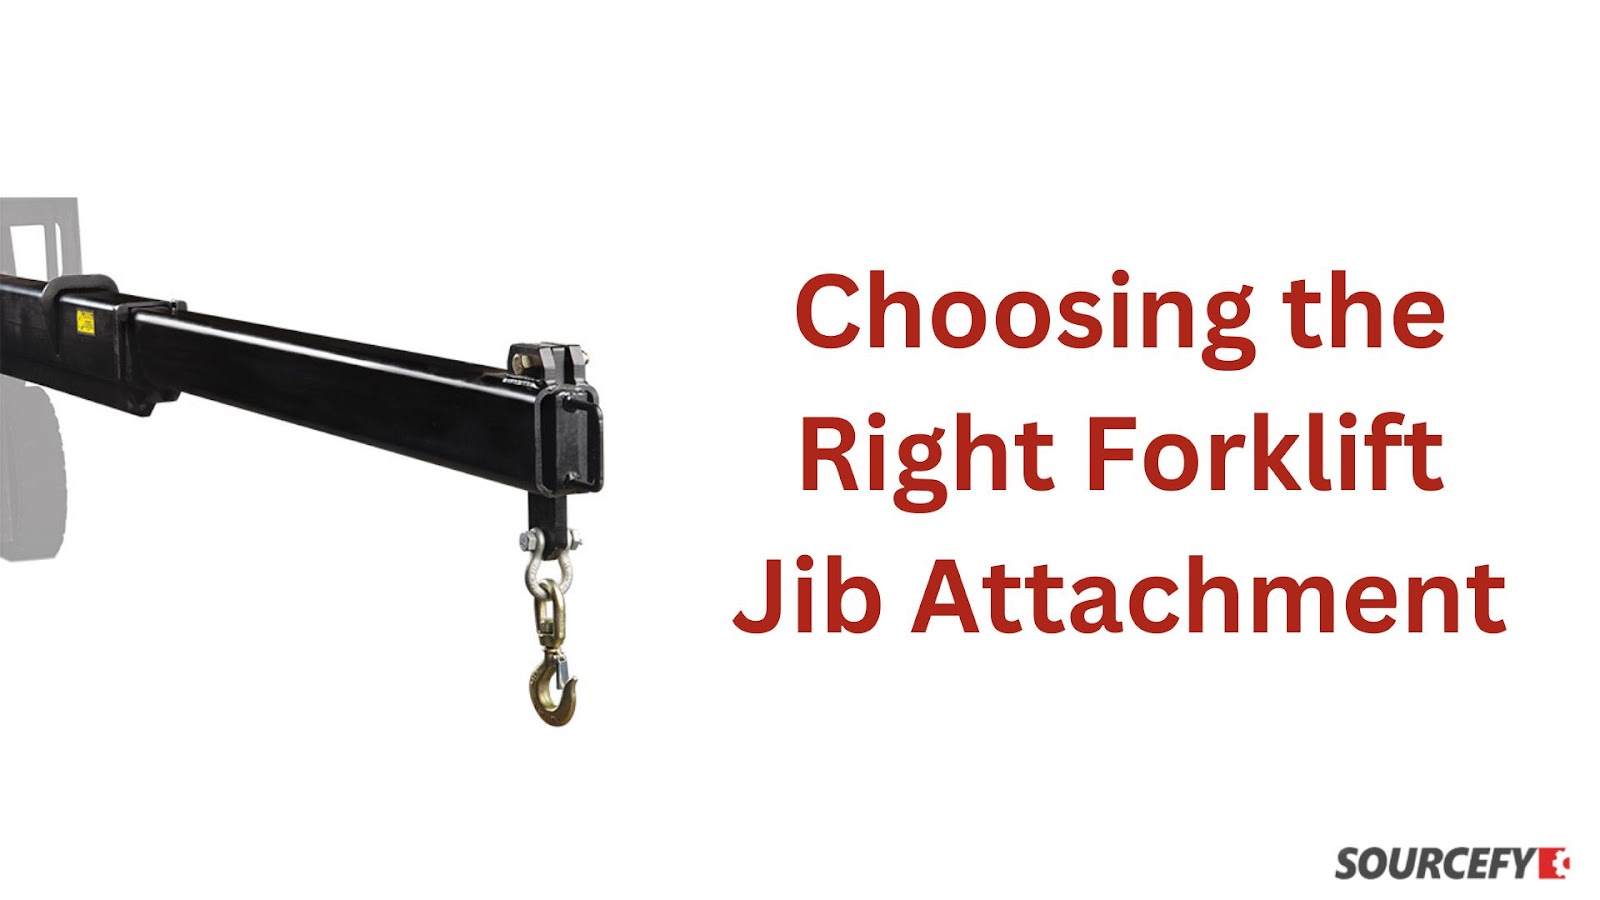 Choosing the Right Forklift Jib Attachment